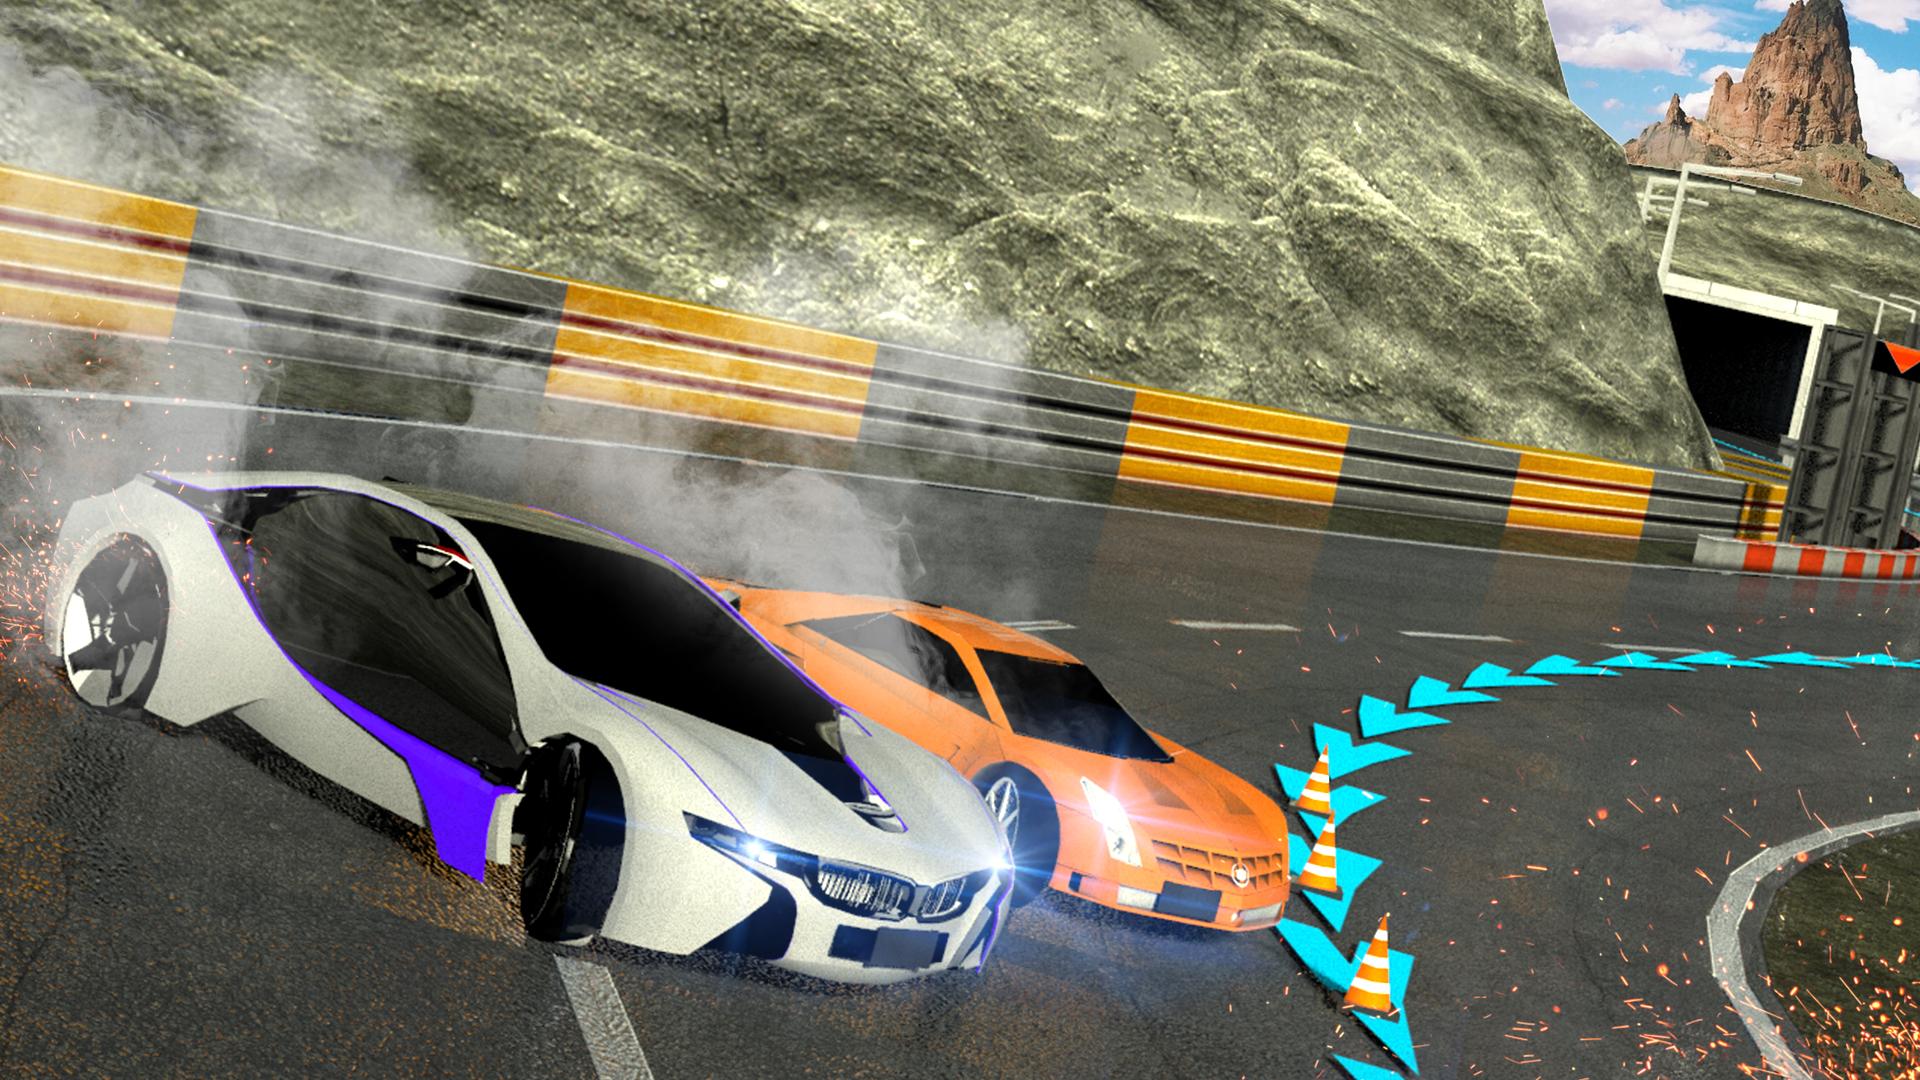 Racing in car multiplayer. Дрифт рейсер царь. Гоночные машины: мультиплеер. Игра гоночные машины мультиплеер. Max Speed игра.